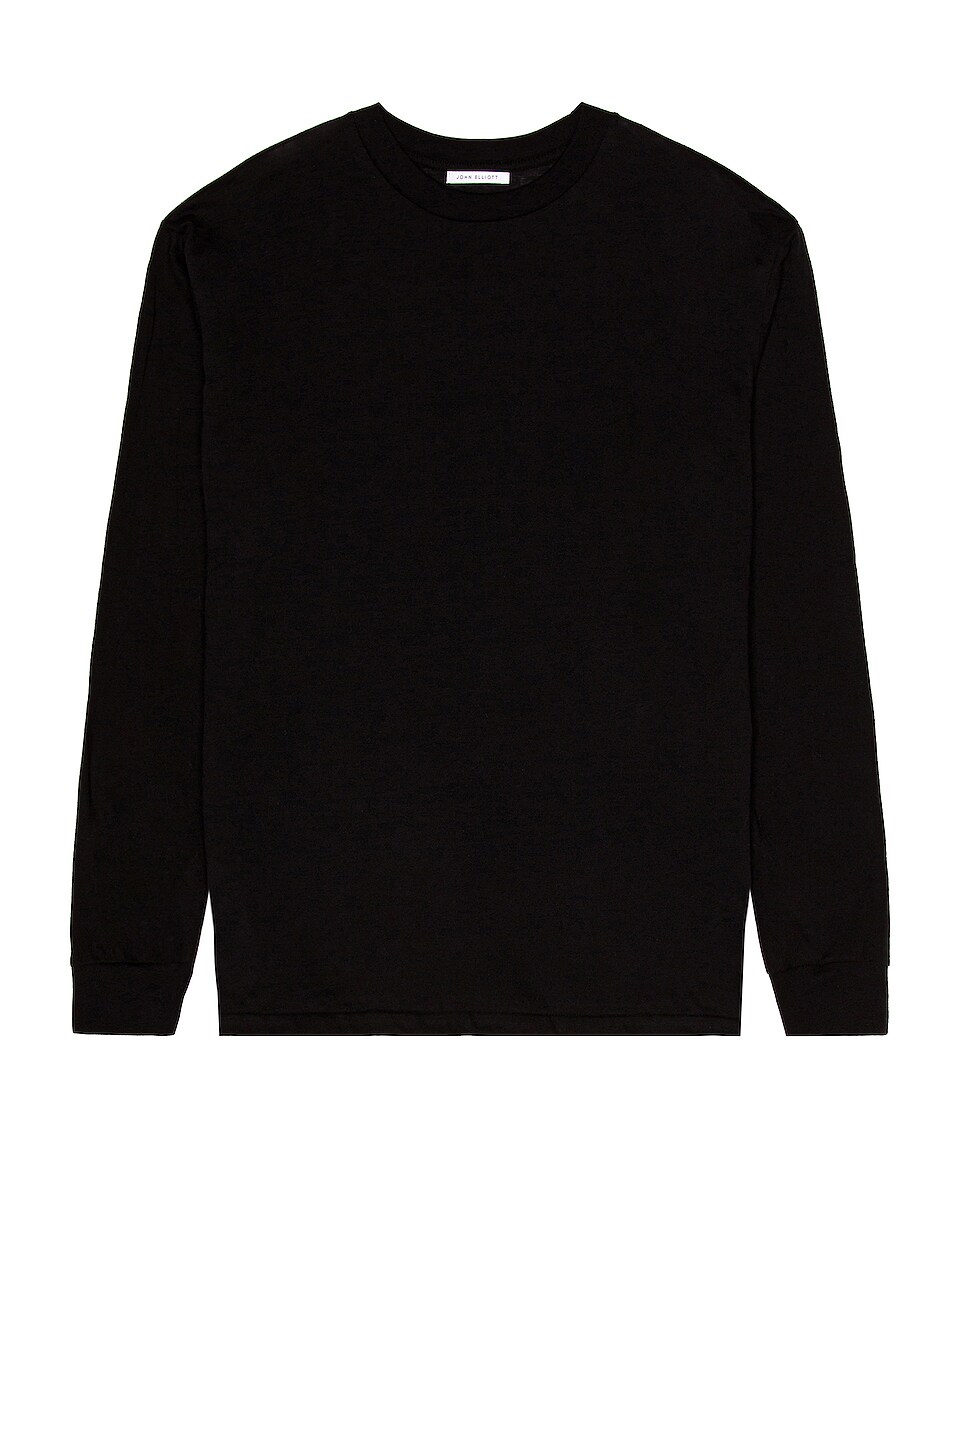 JOHN ELLIOTT Cotton Cashmere Pullover in Black | REVOLVE